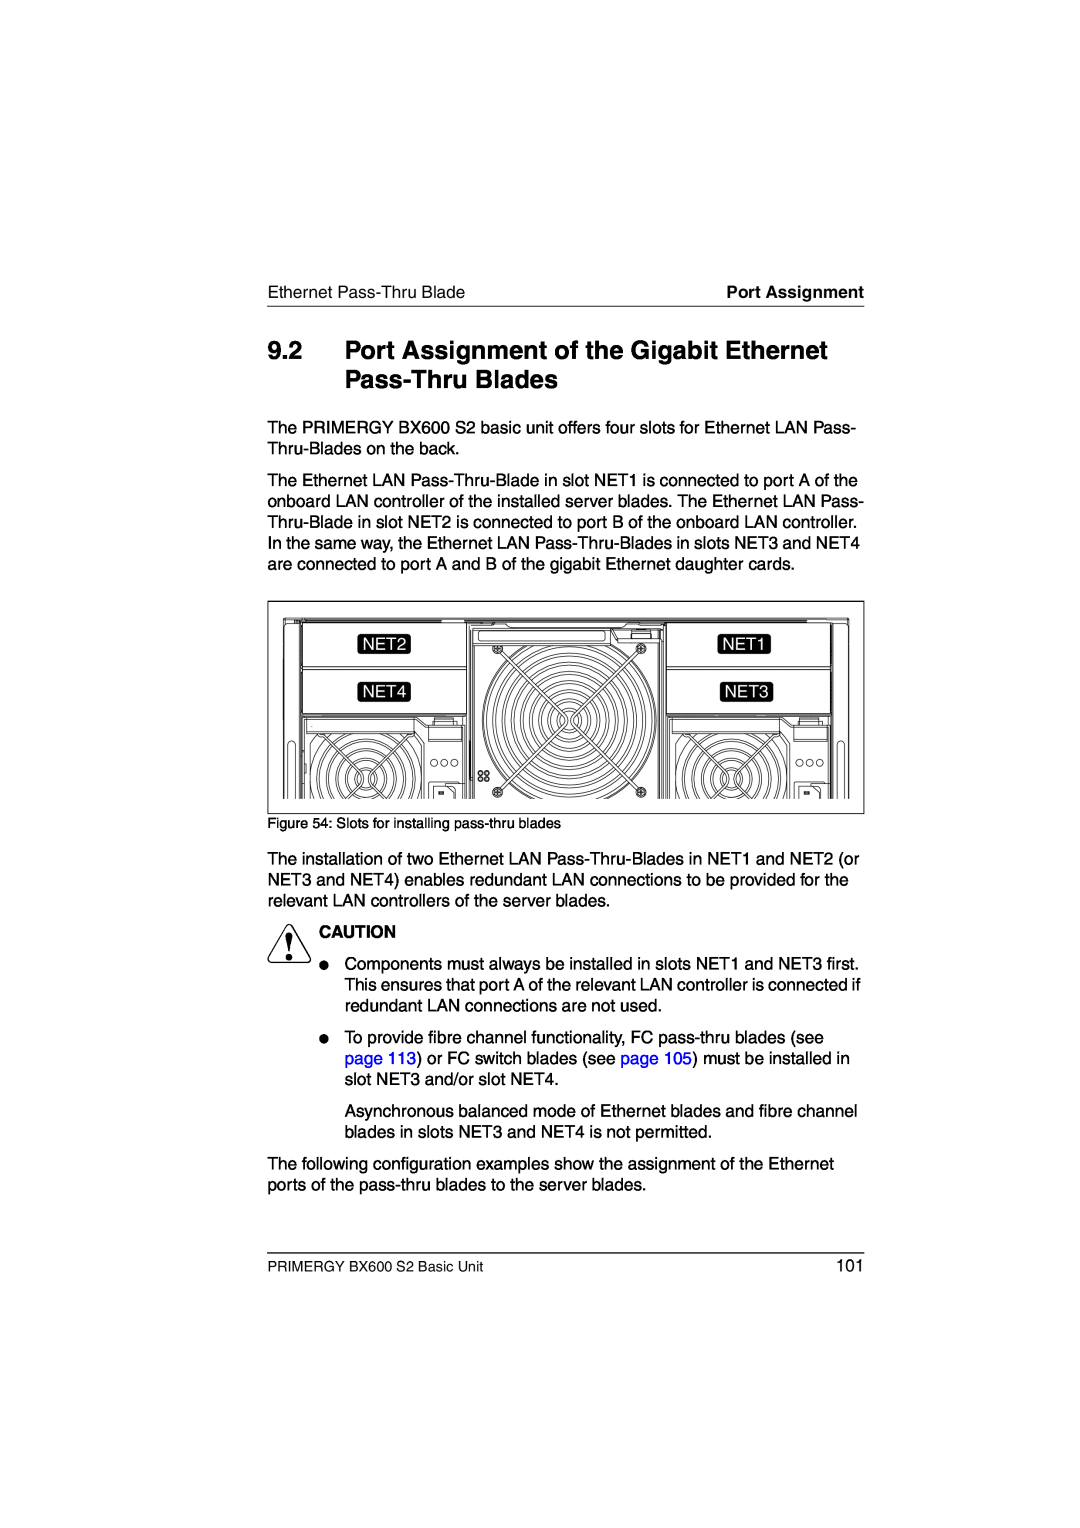 Fujitsu BX600 S2 manual Port Assignment of the Gigabit Ethernet Pass-Thru Blades, NET2, NET1, NET4, NET3, V Caution 